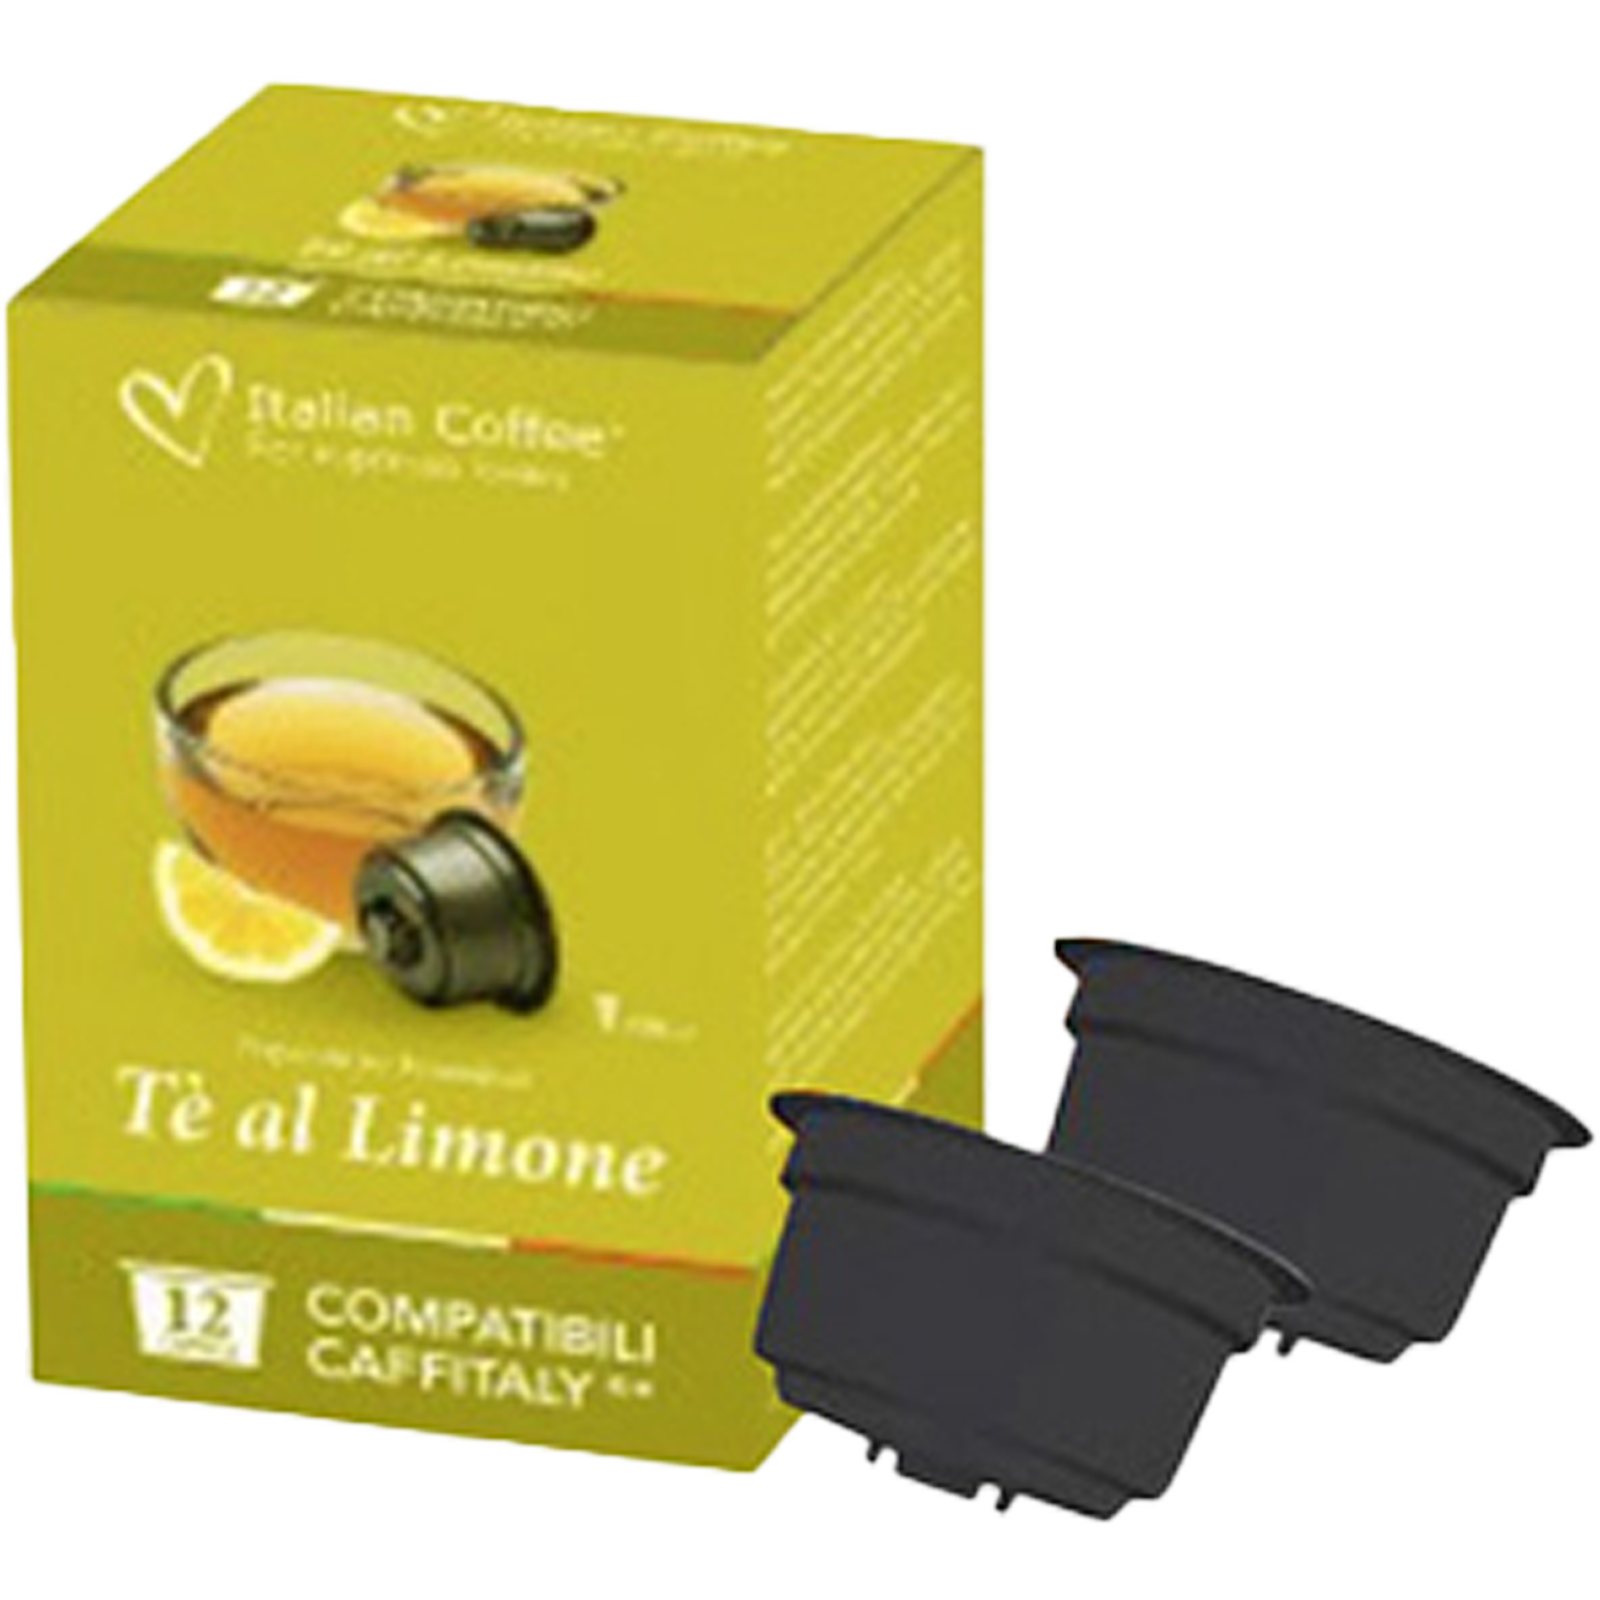 Ceai de Lamaie, 72 capsule compatibile Cafissimo/Caffitaly/Beanz, Italian Coffee